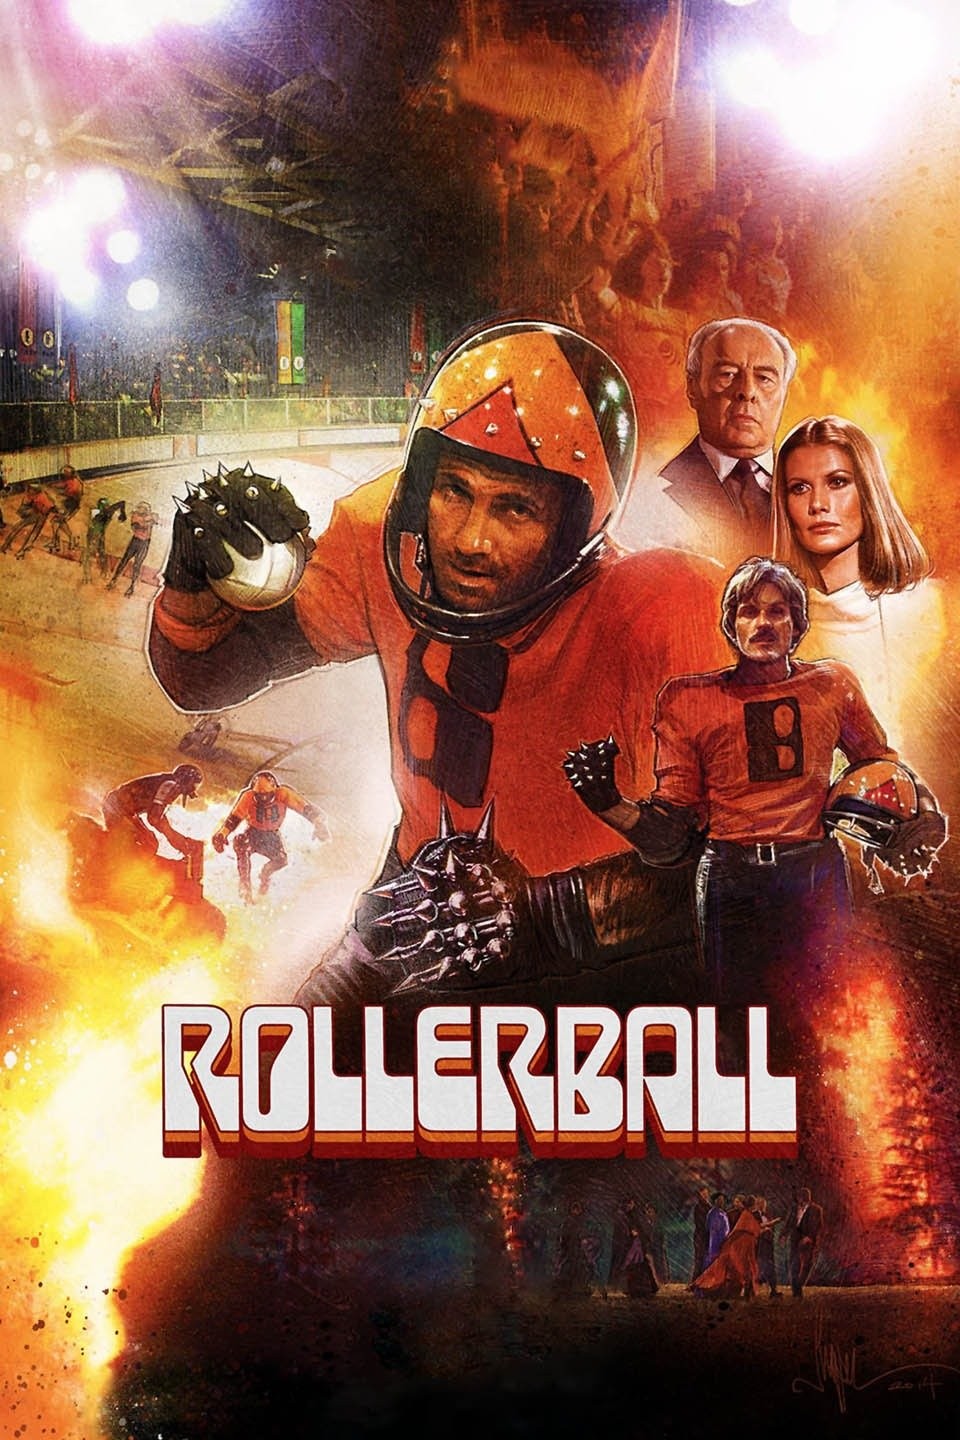 Rollerball –